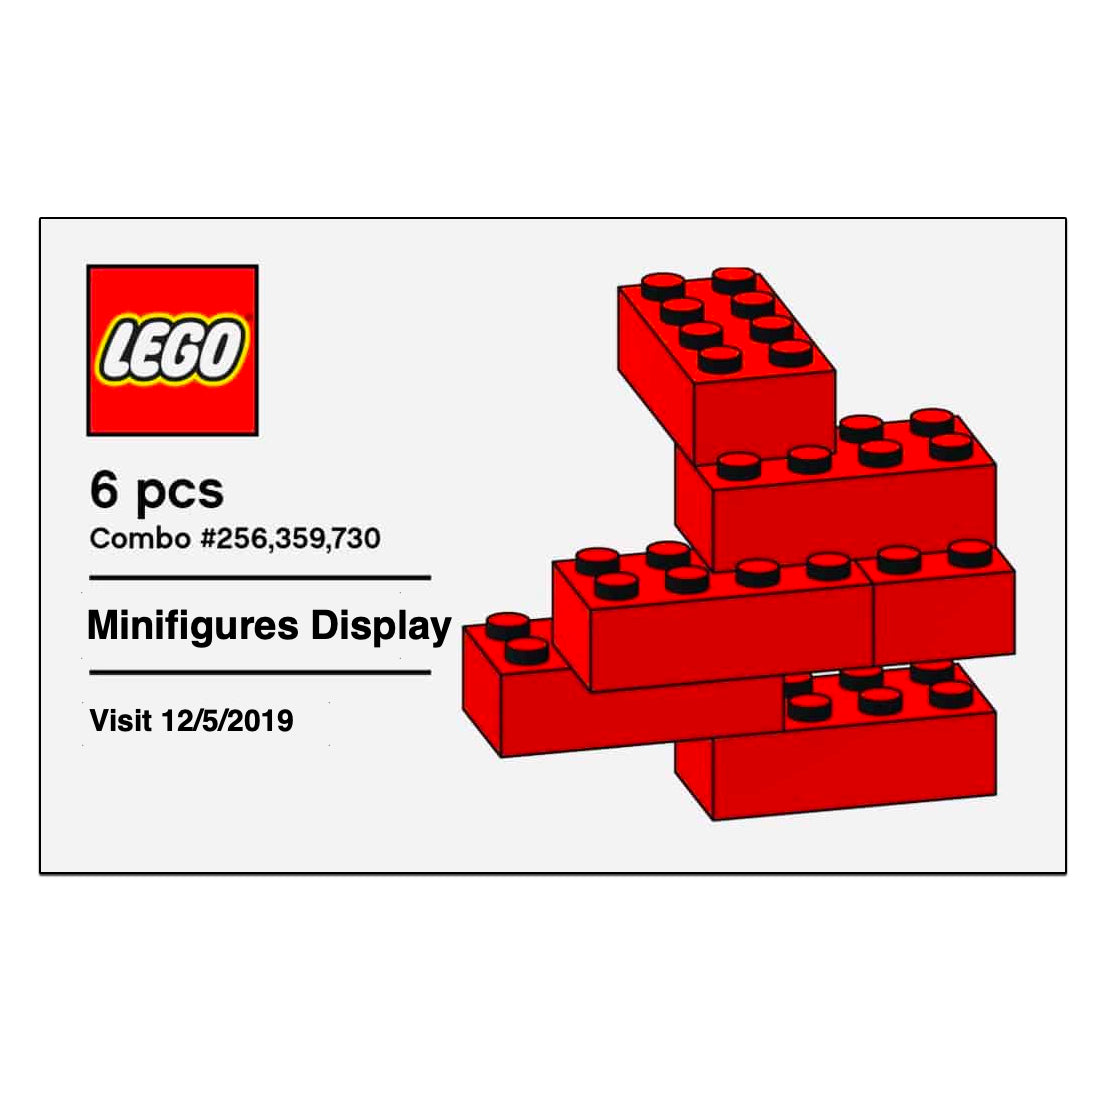 6 lego bricks combinations